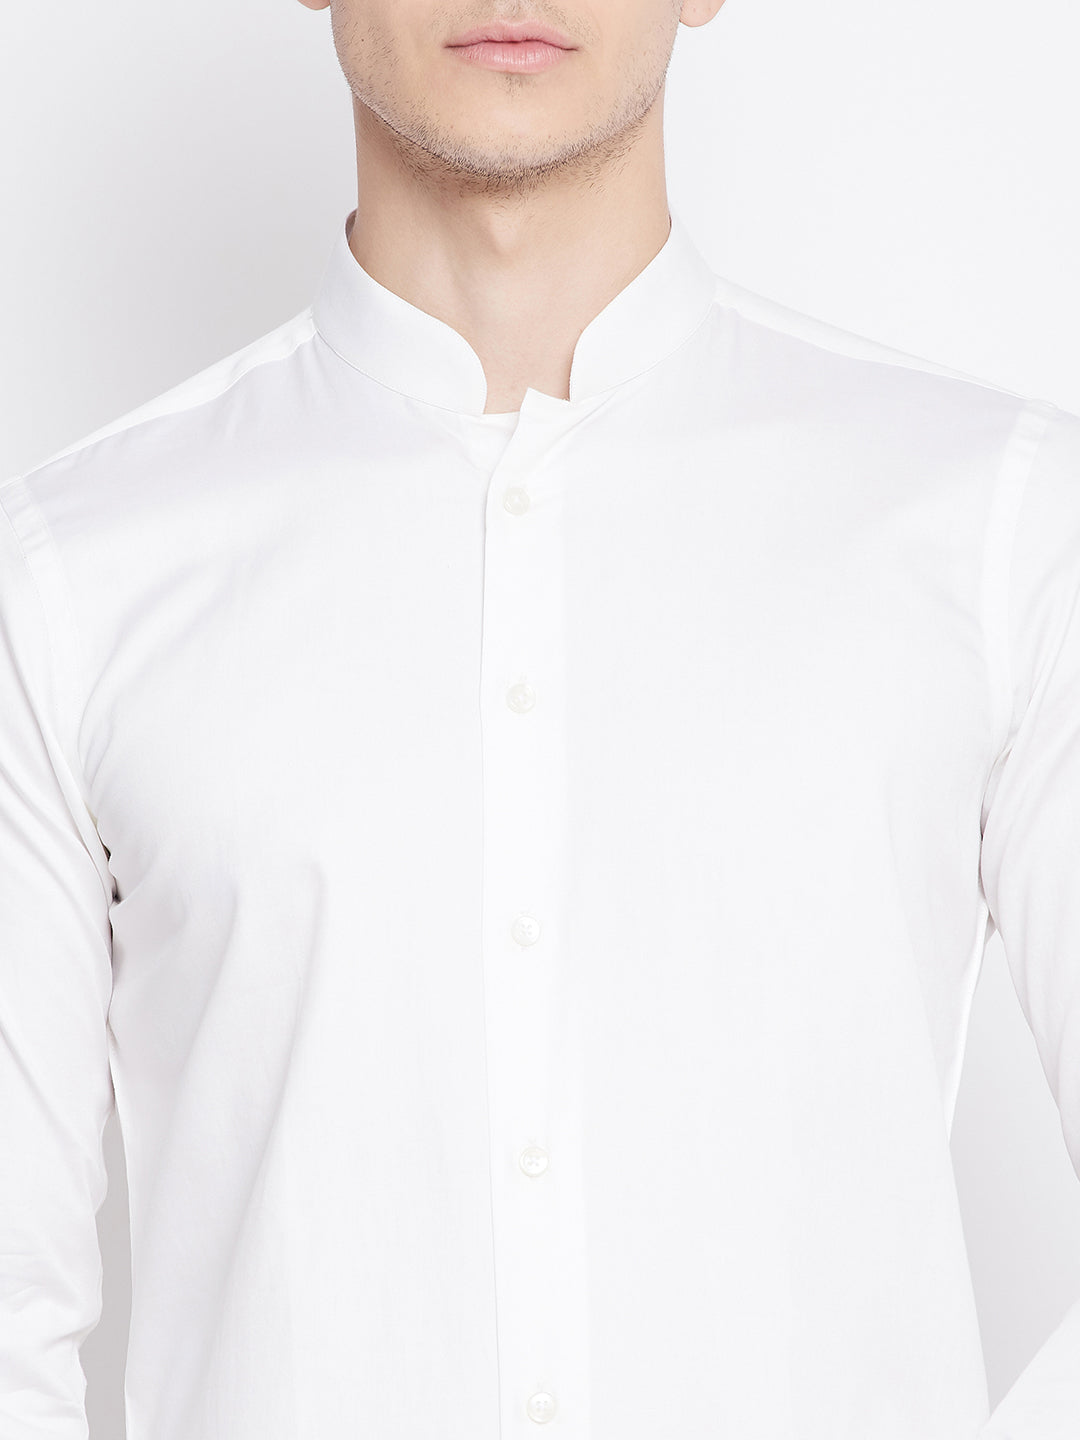 Powder White Satin Cotton Shirt with Mandarin Collar